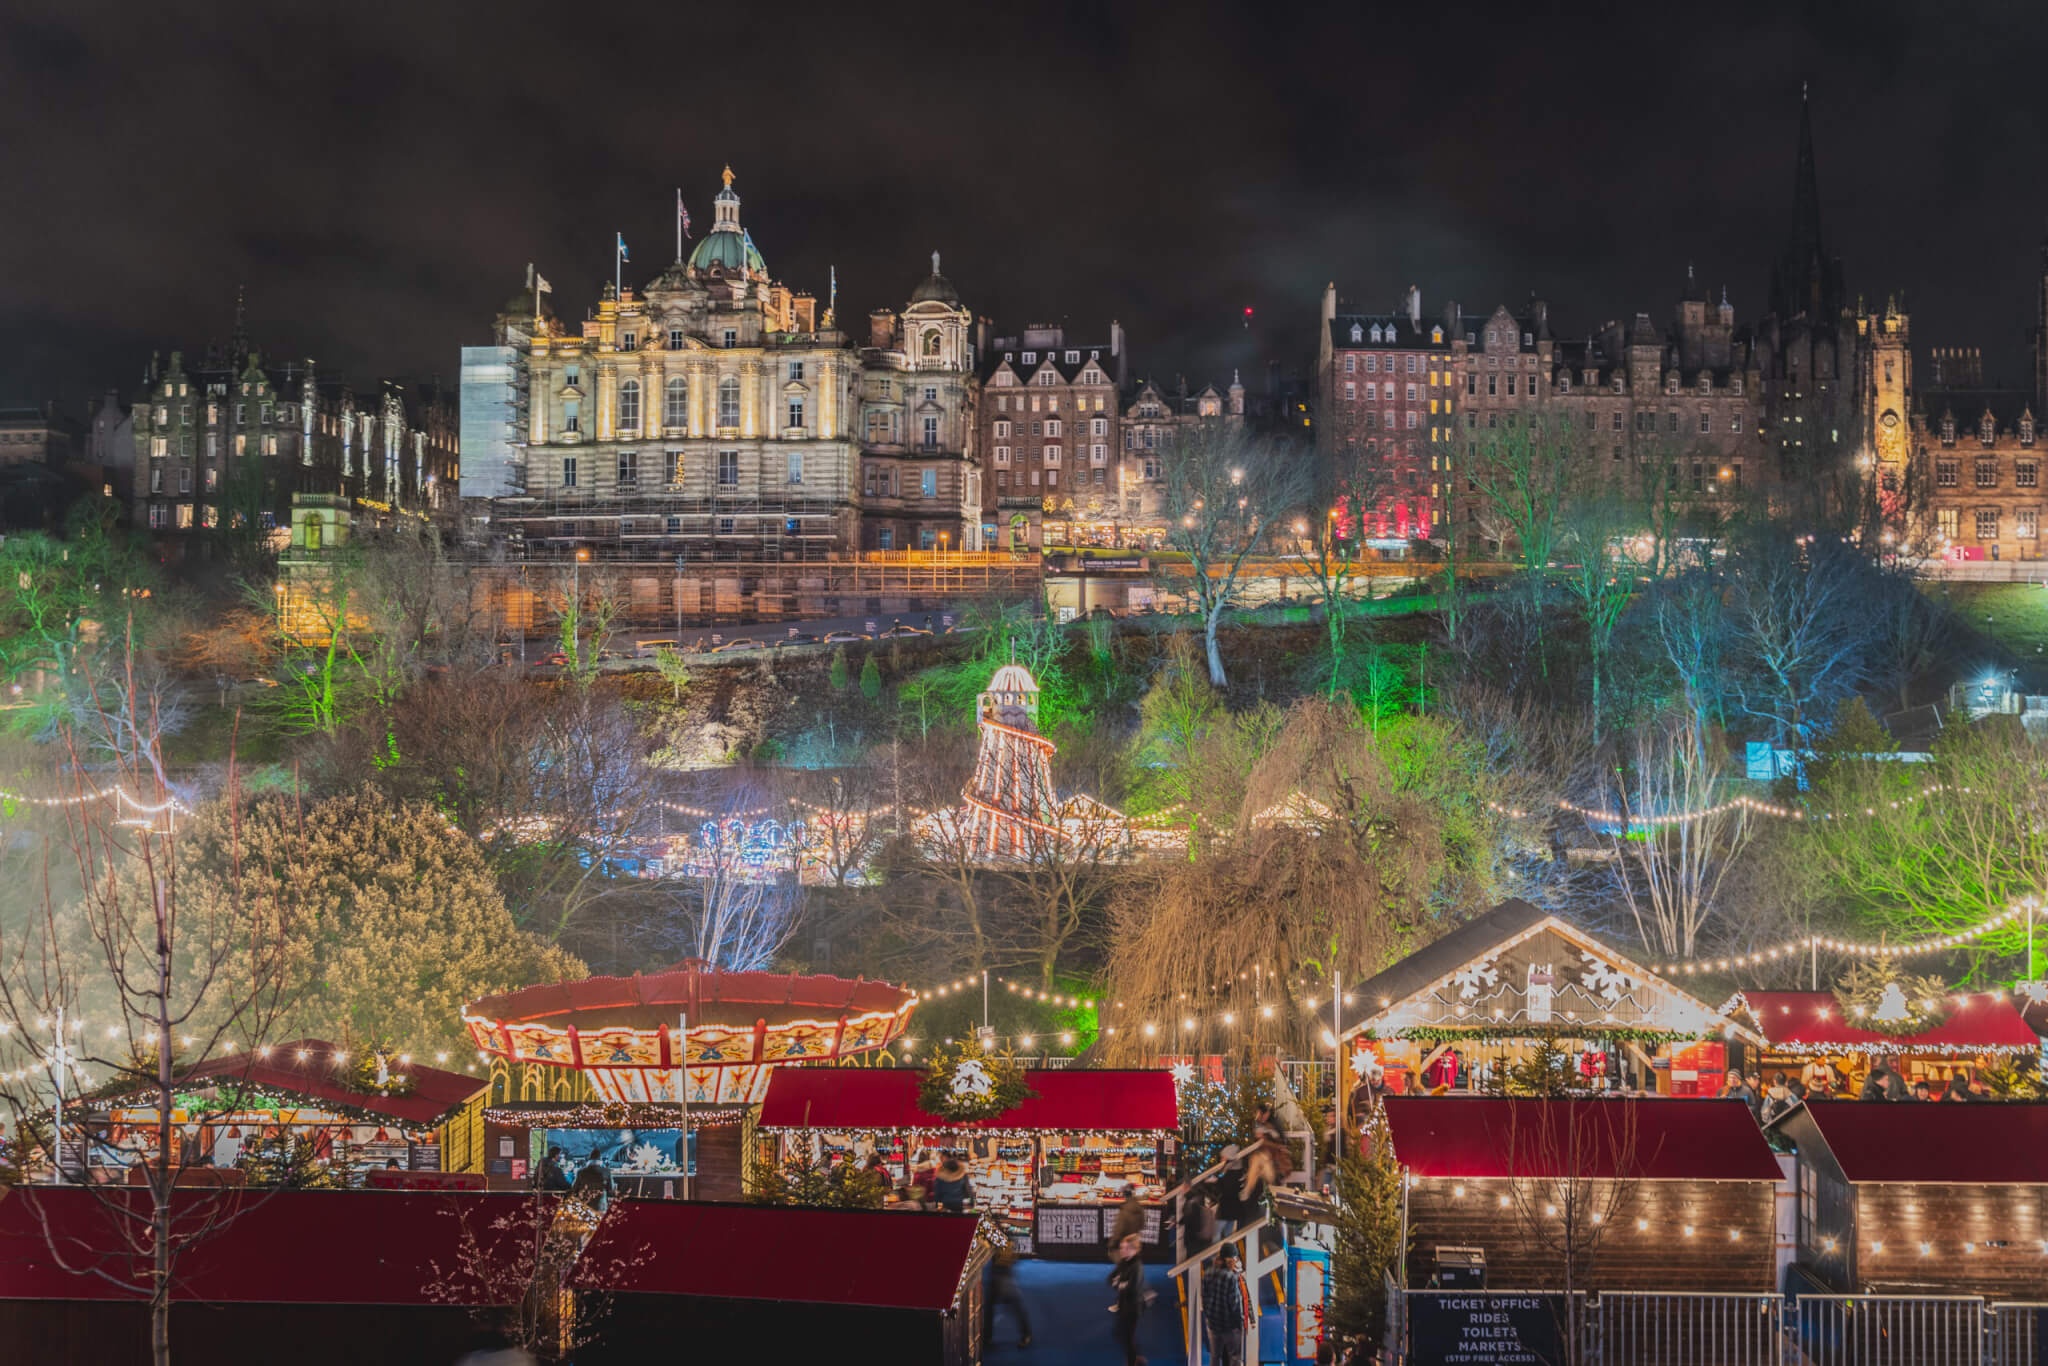 Christmas Market at Edinburgh, Scotland. Night lights lit up setting a lovely scene against the night sky.